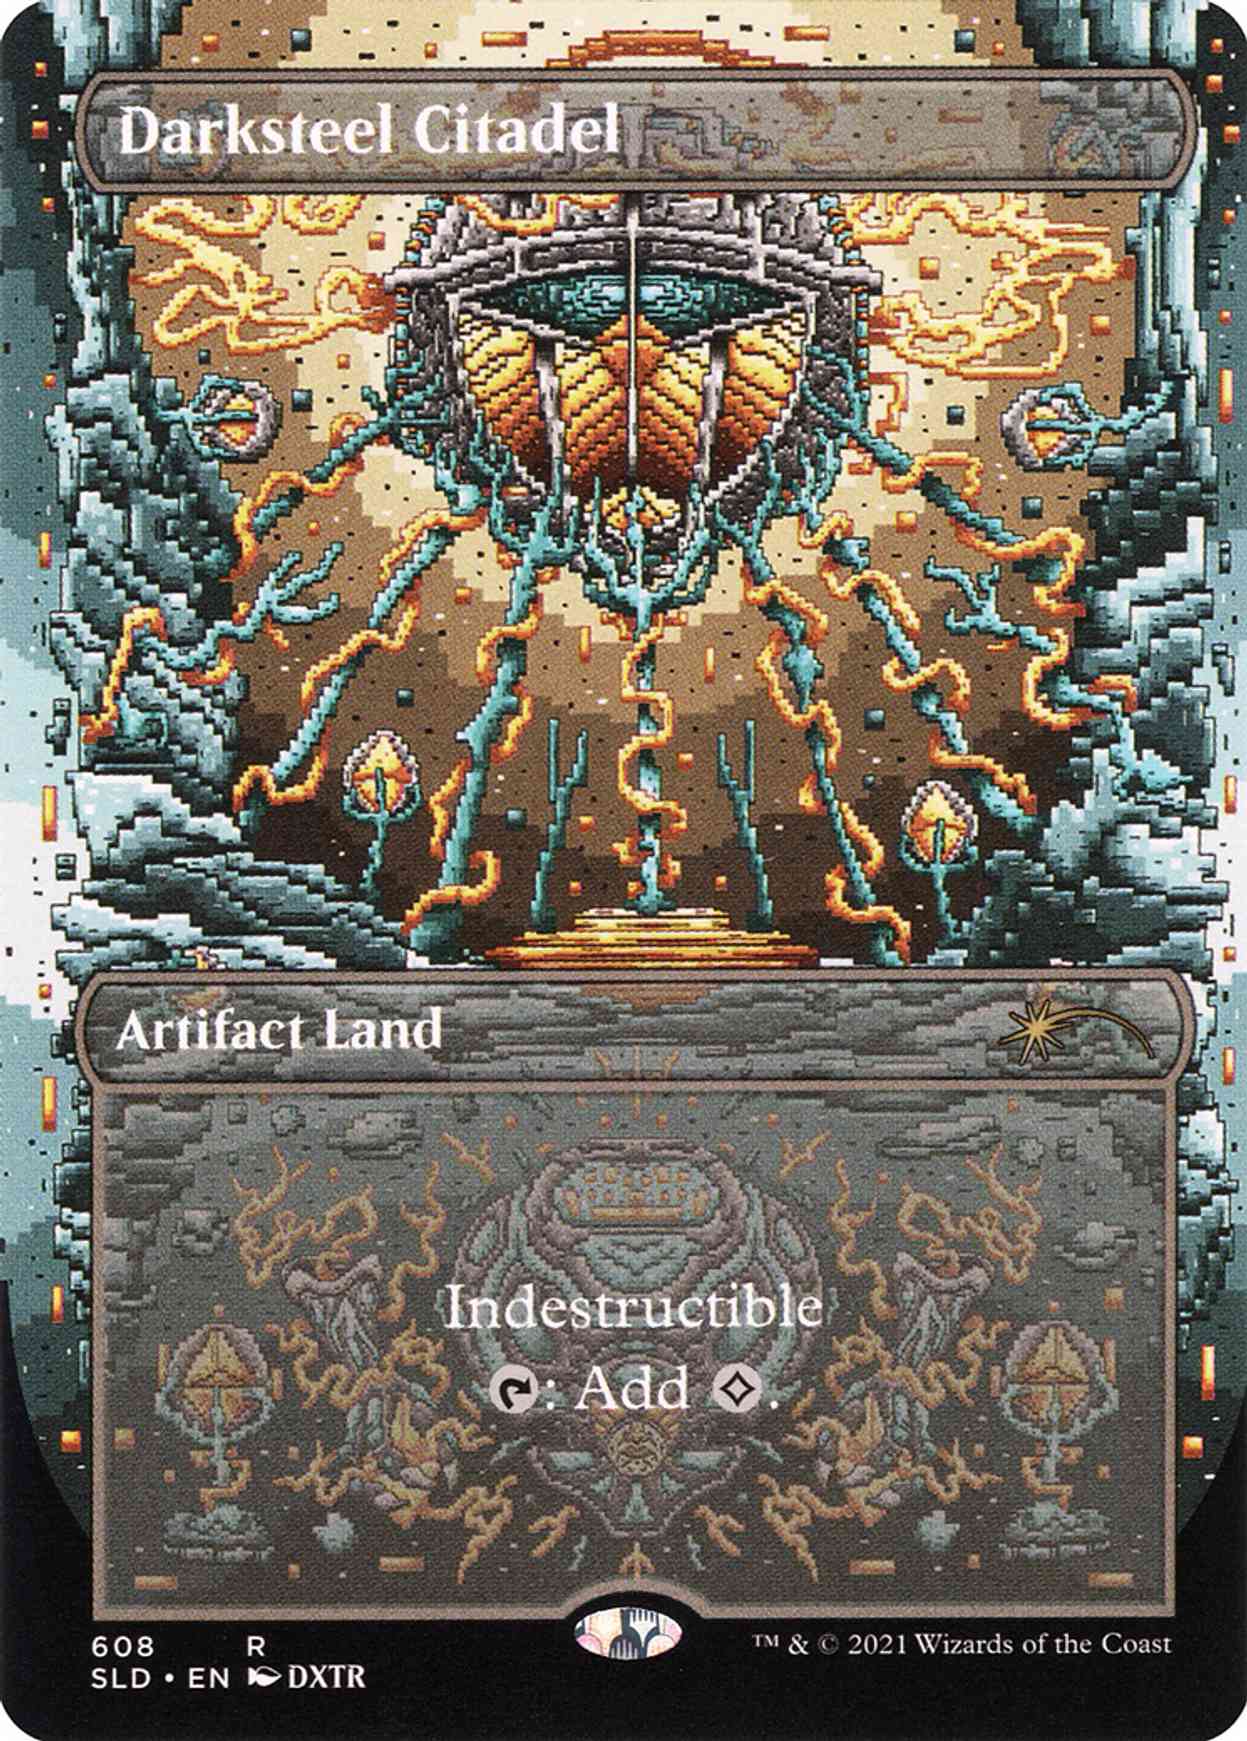 Darksteel Citadel magic card front